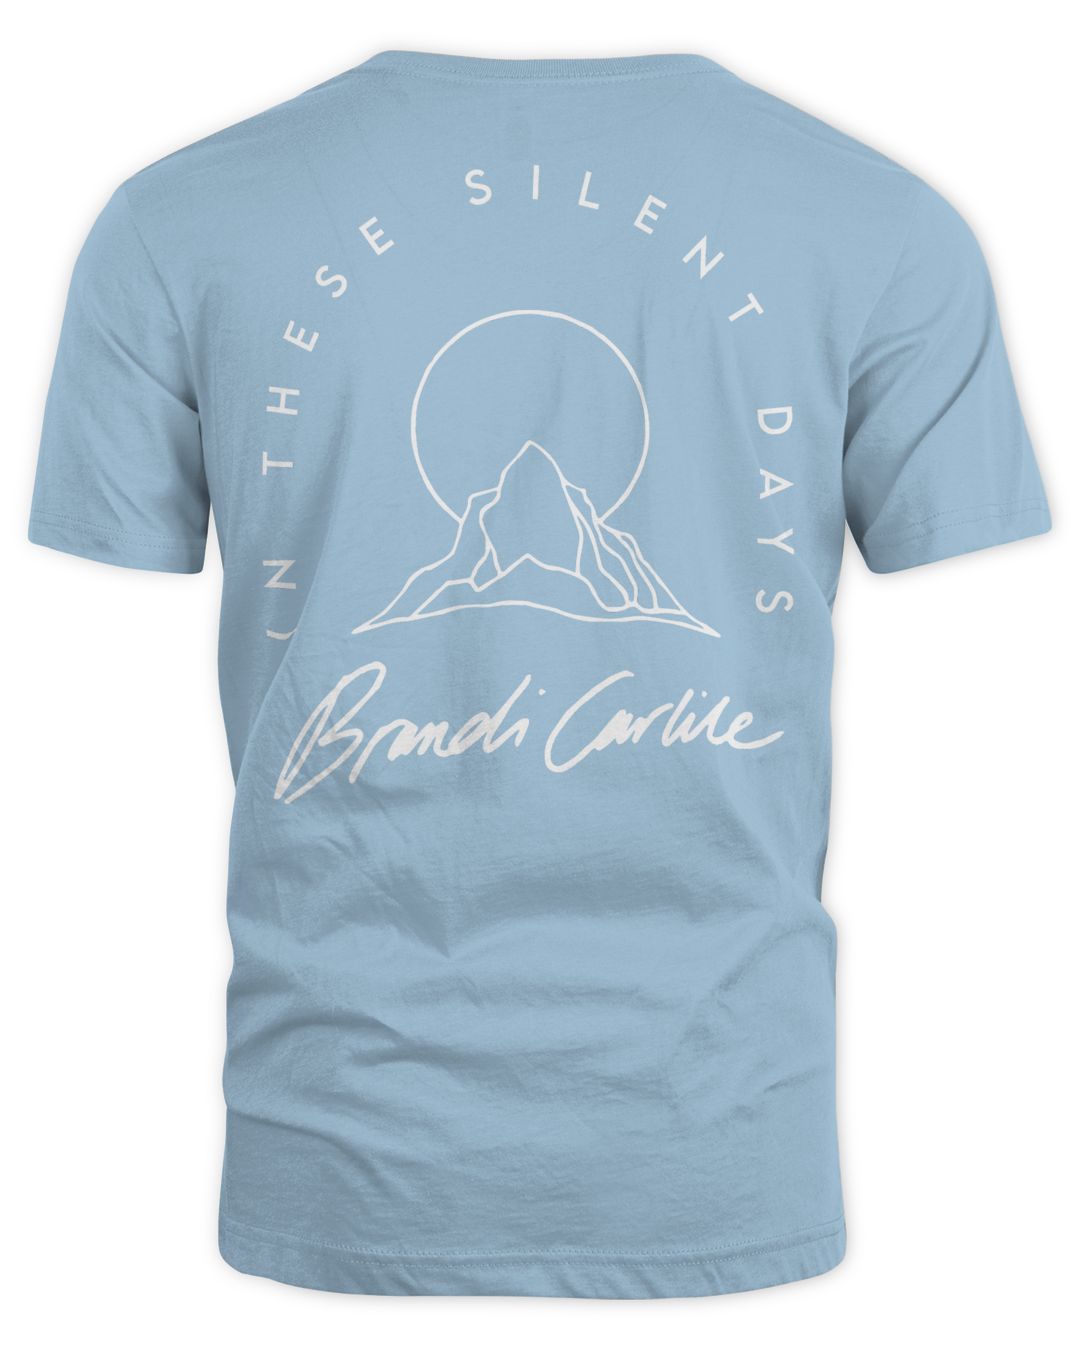 Brandi Carlile Merch in These Silent Days T-Shirt